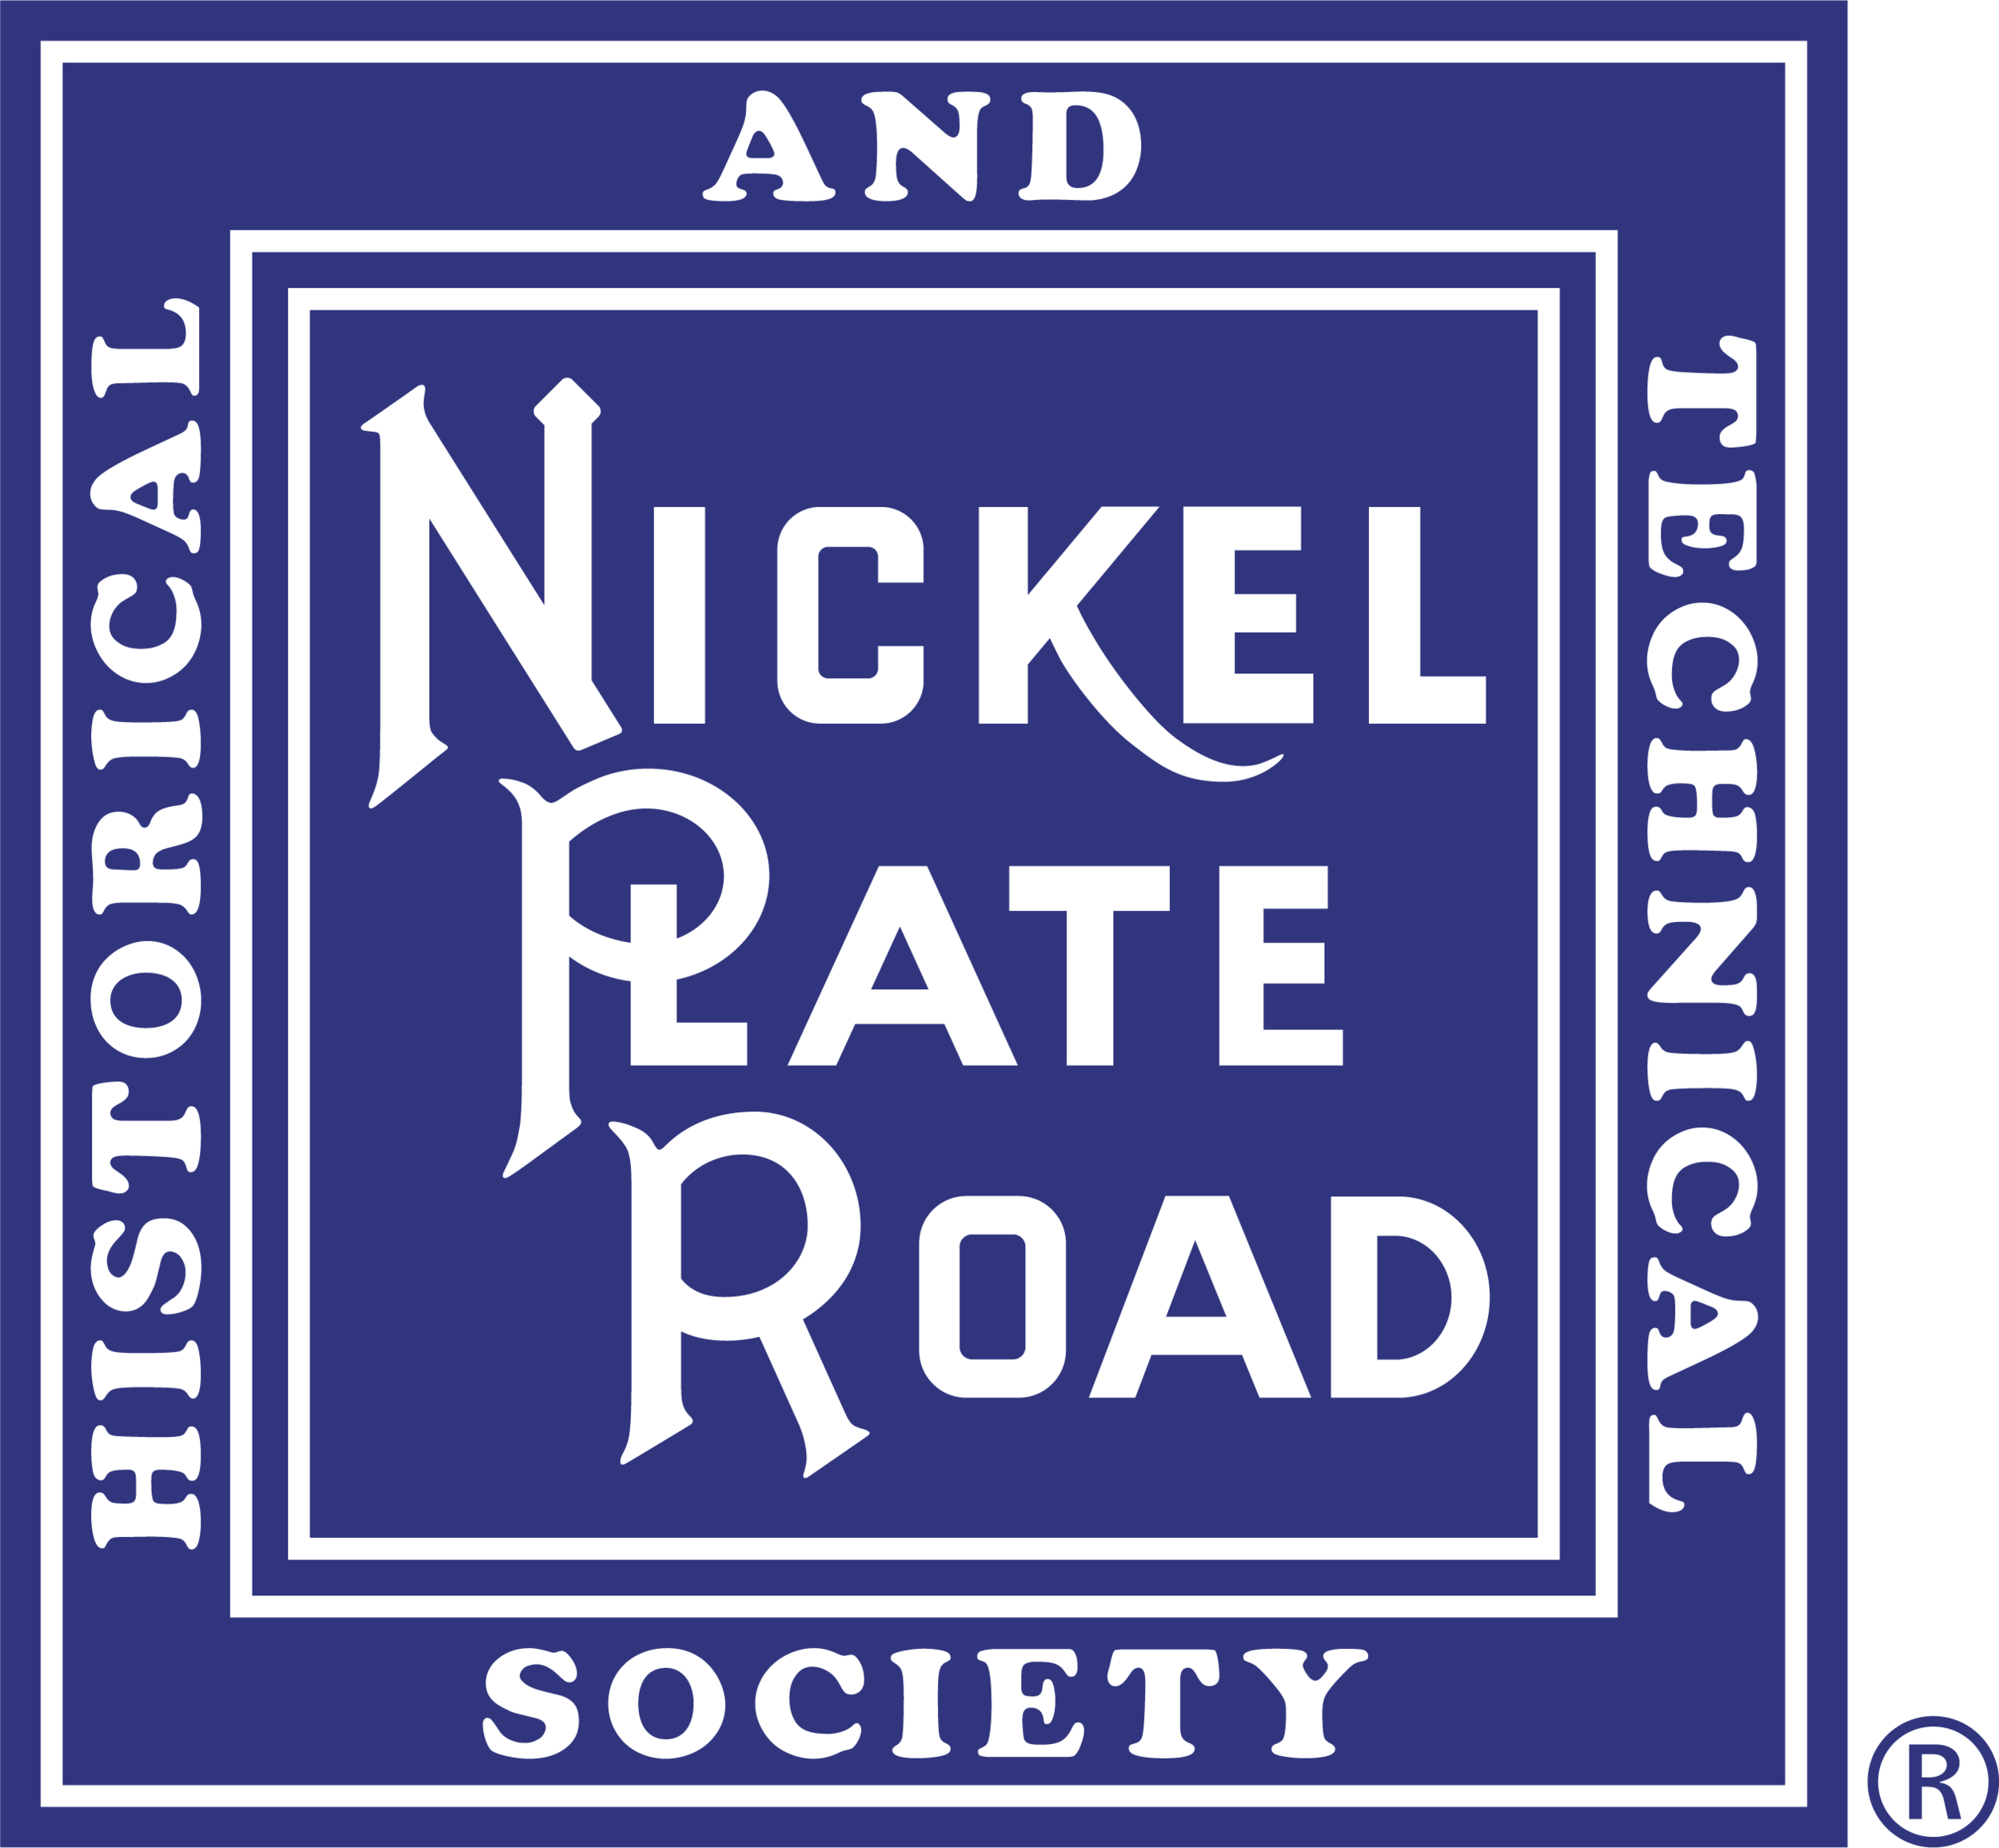 Nickel Plate Road - Wikipedia